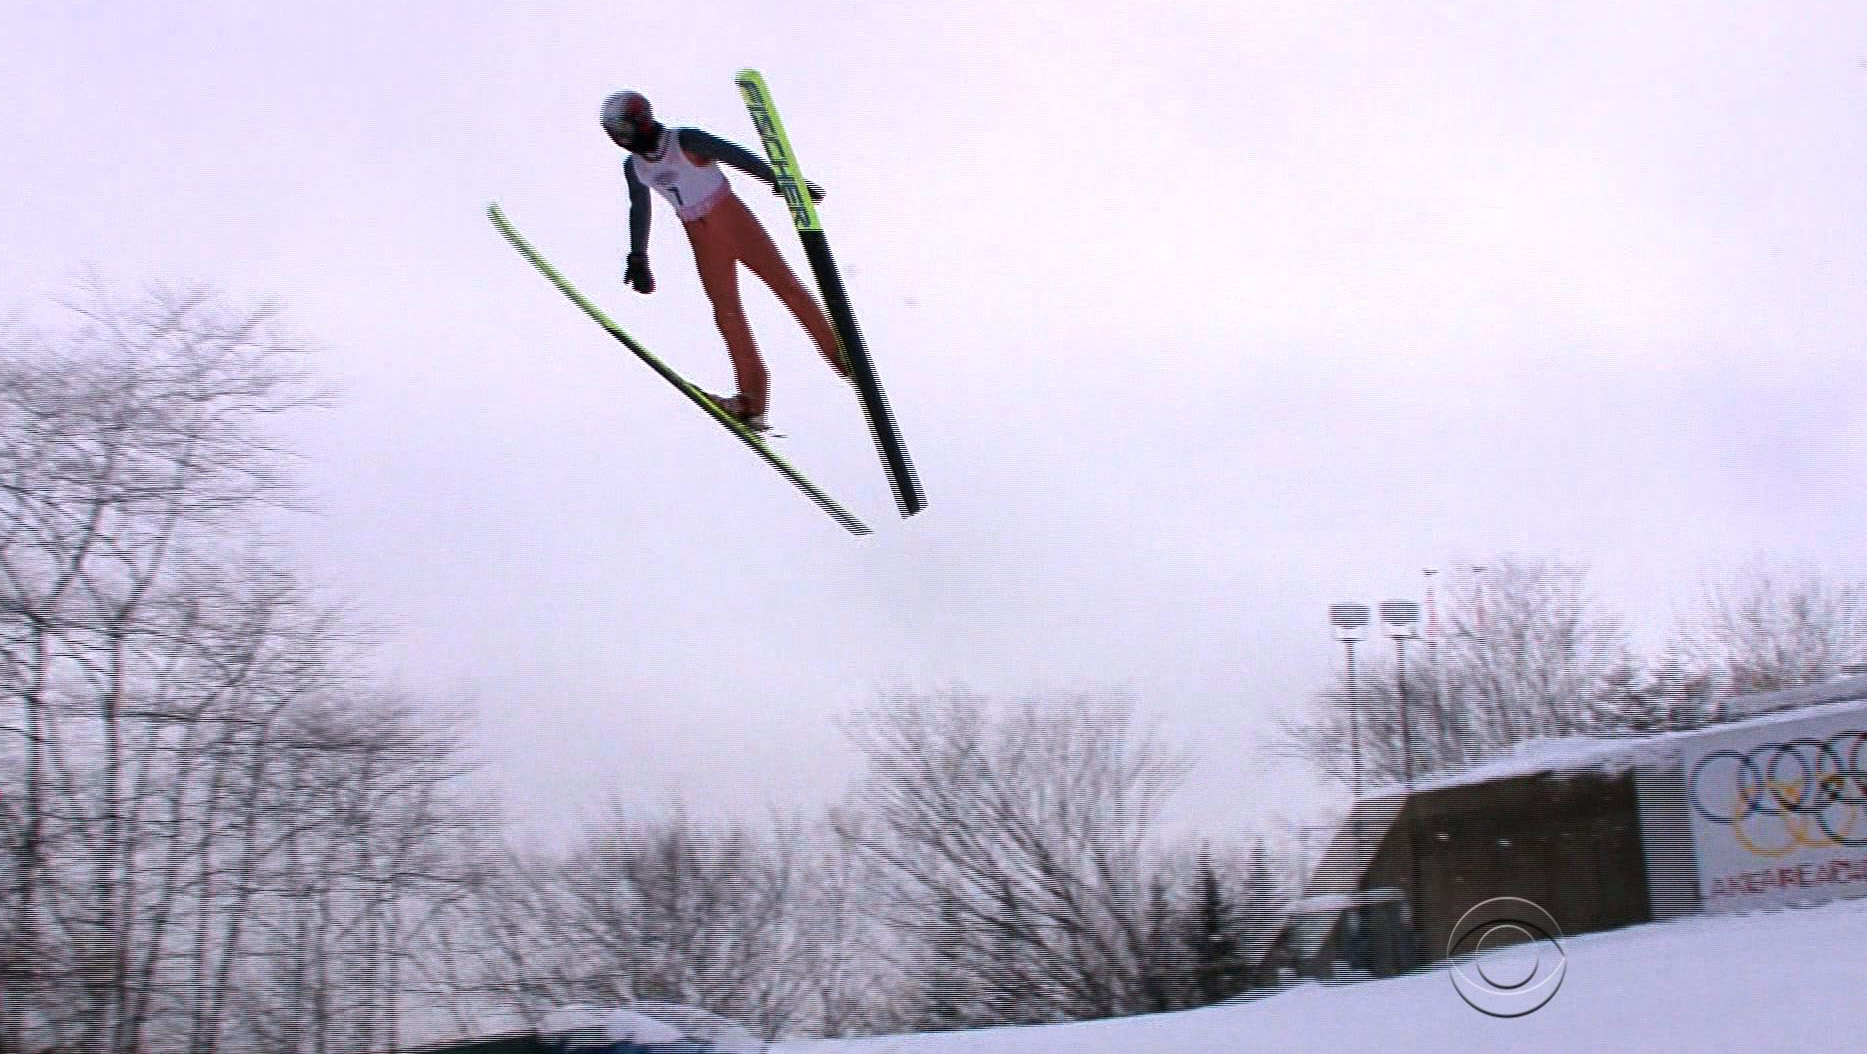 Women's ski jumping finally makes it to Olympics CBS News